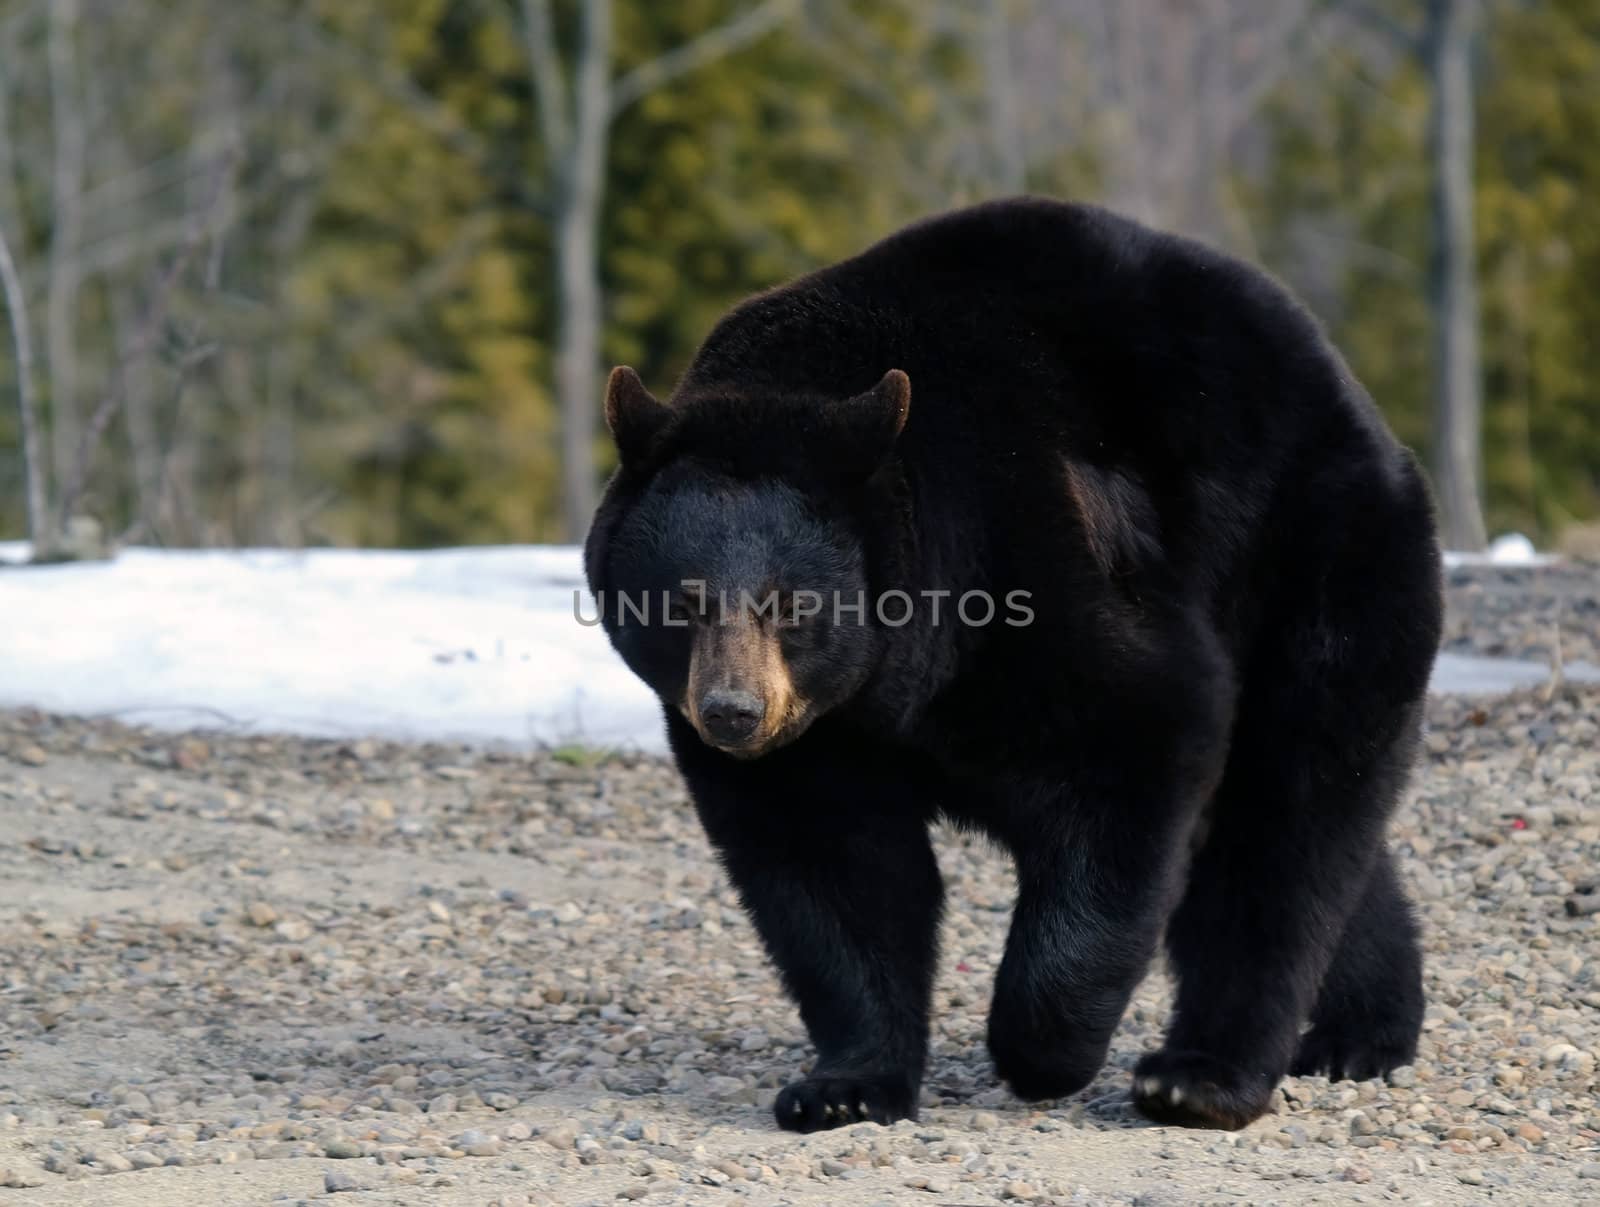 Black bear by nialat